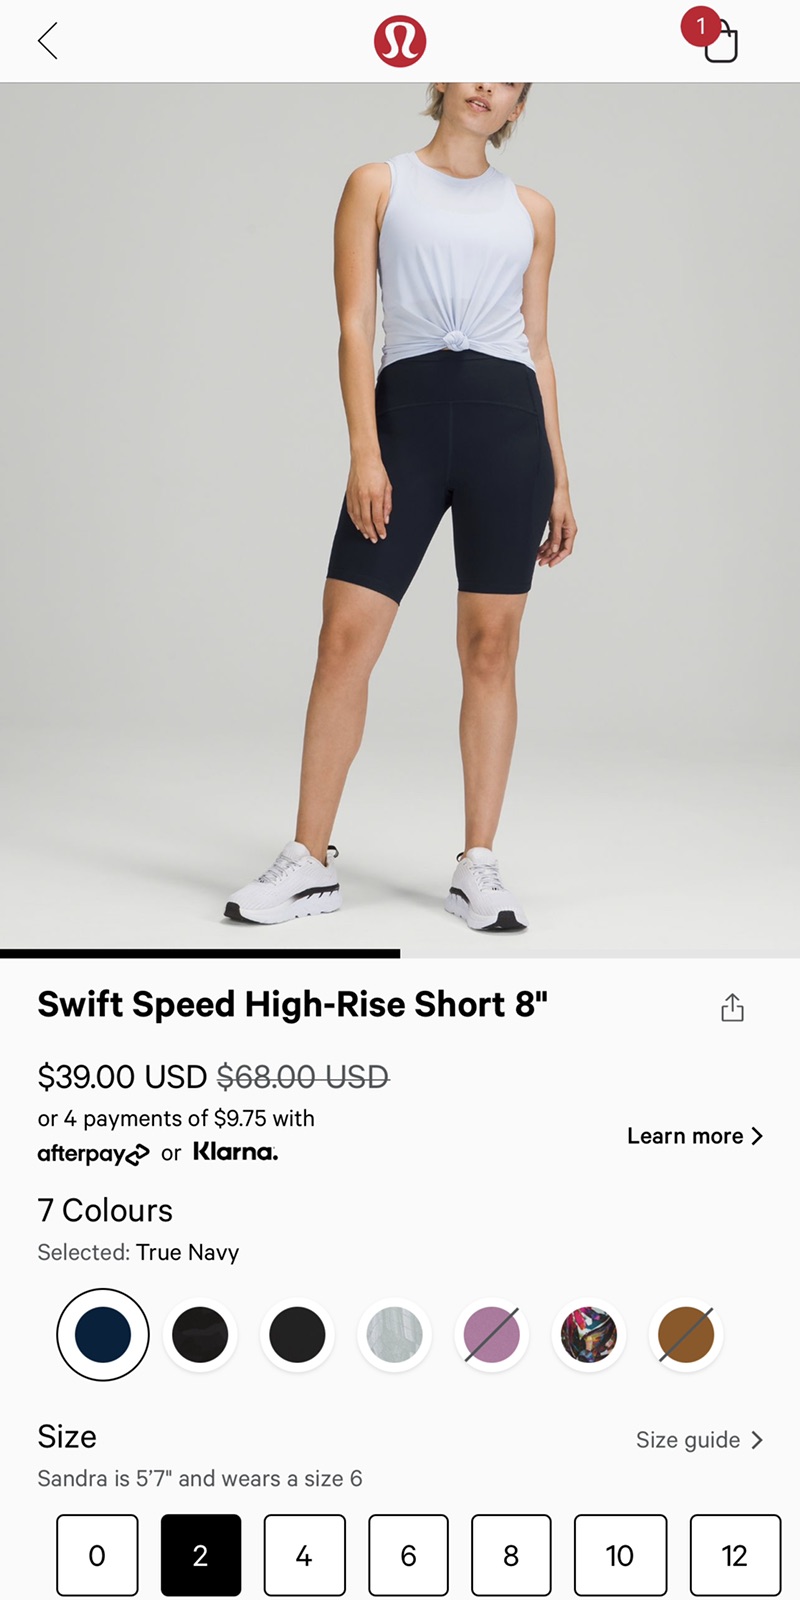 Swift Speed High-Rise Short 8" | Women's Shorts | lululemon骑行裤